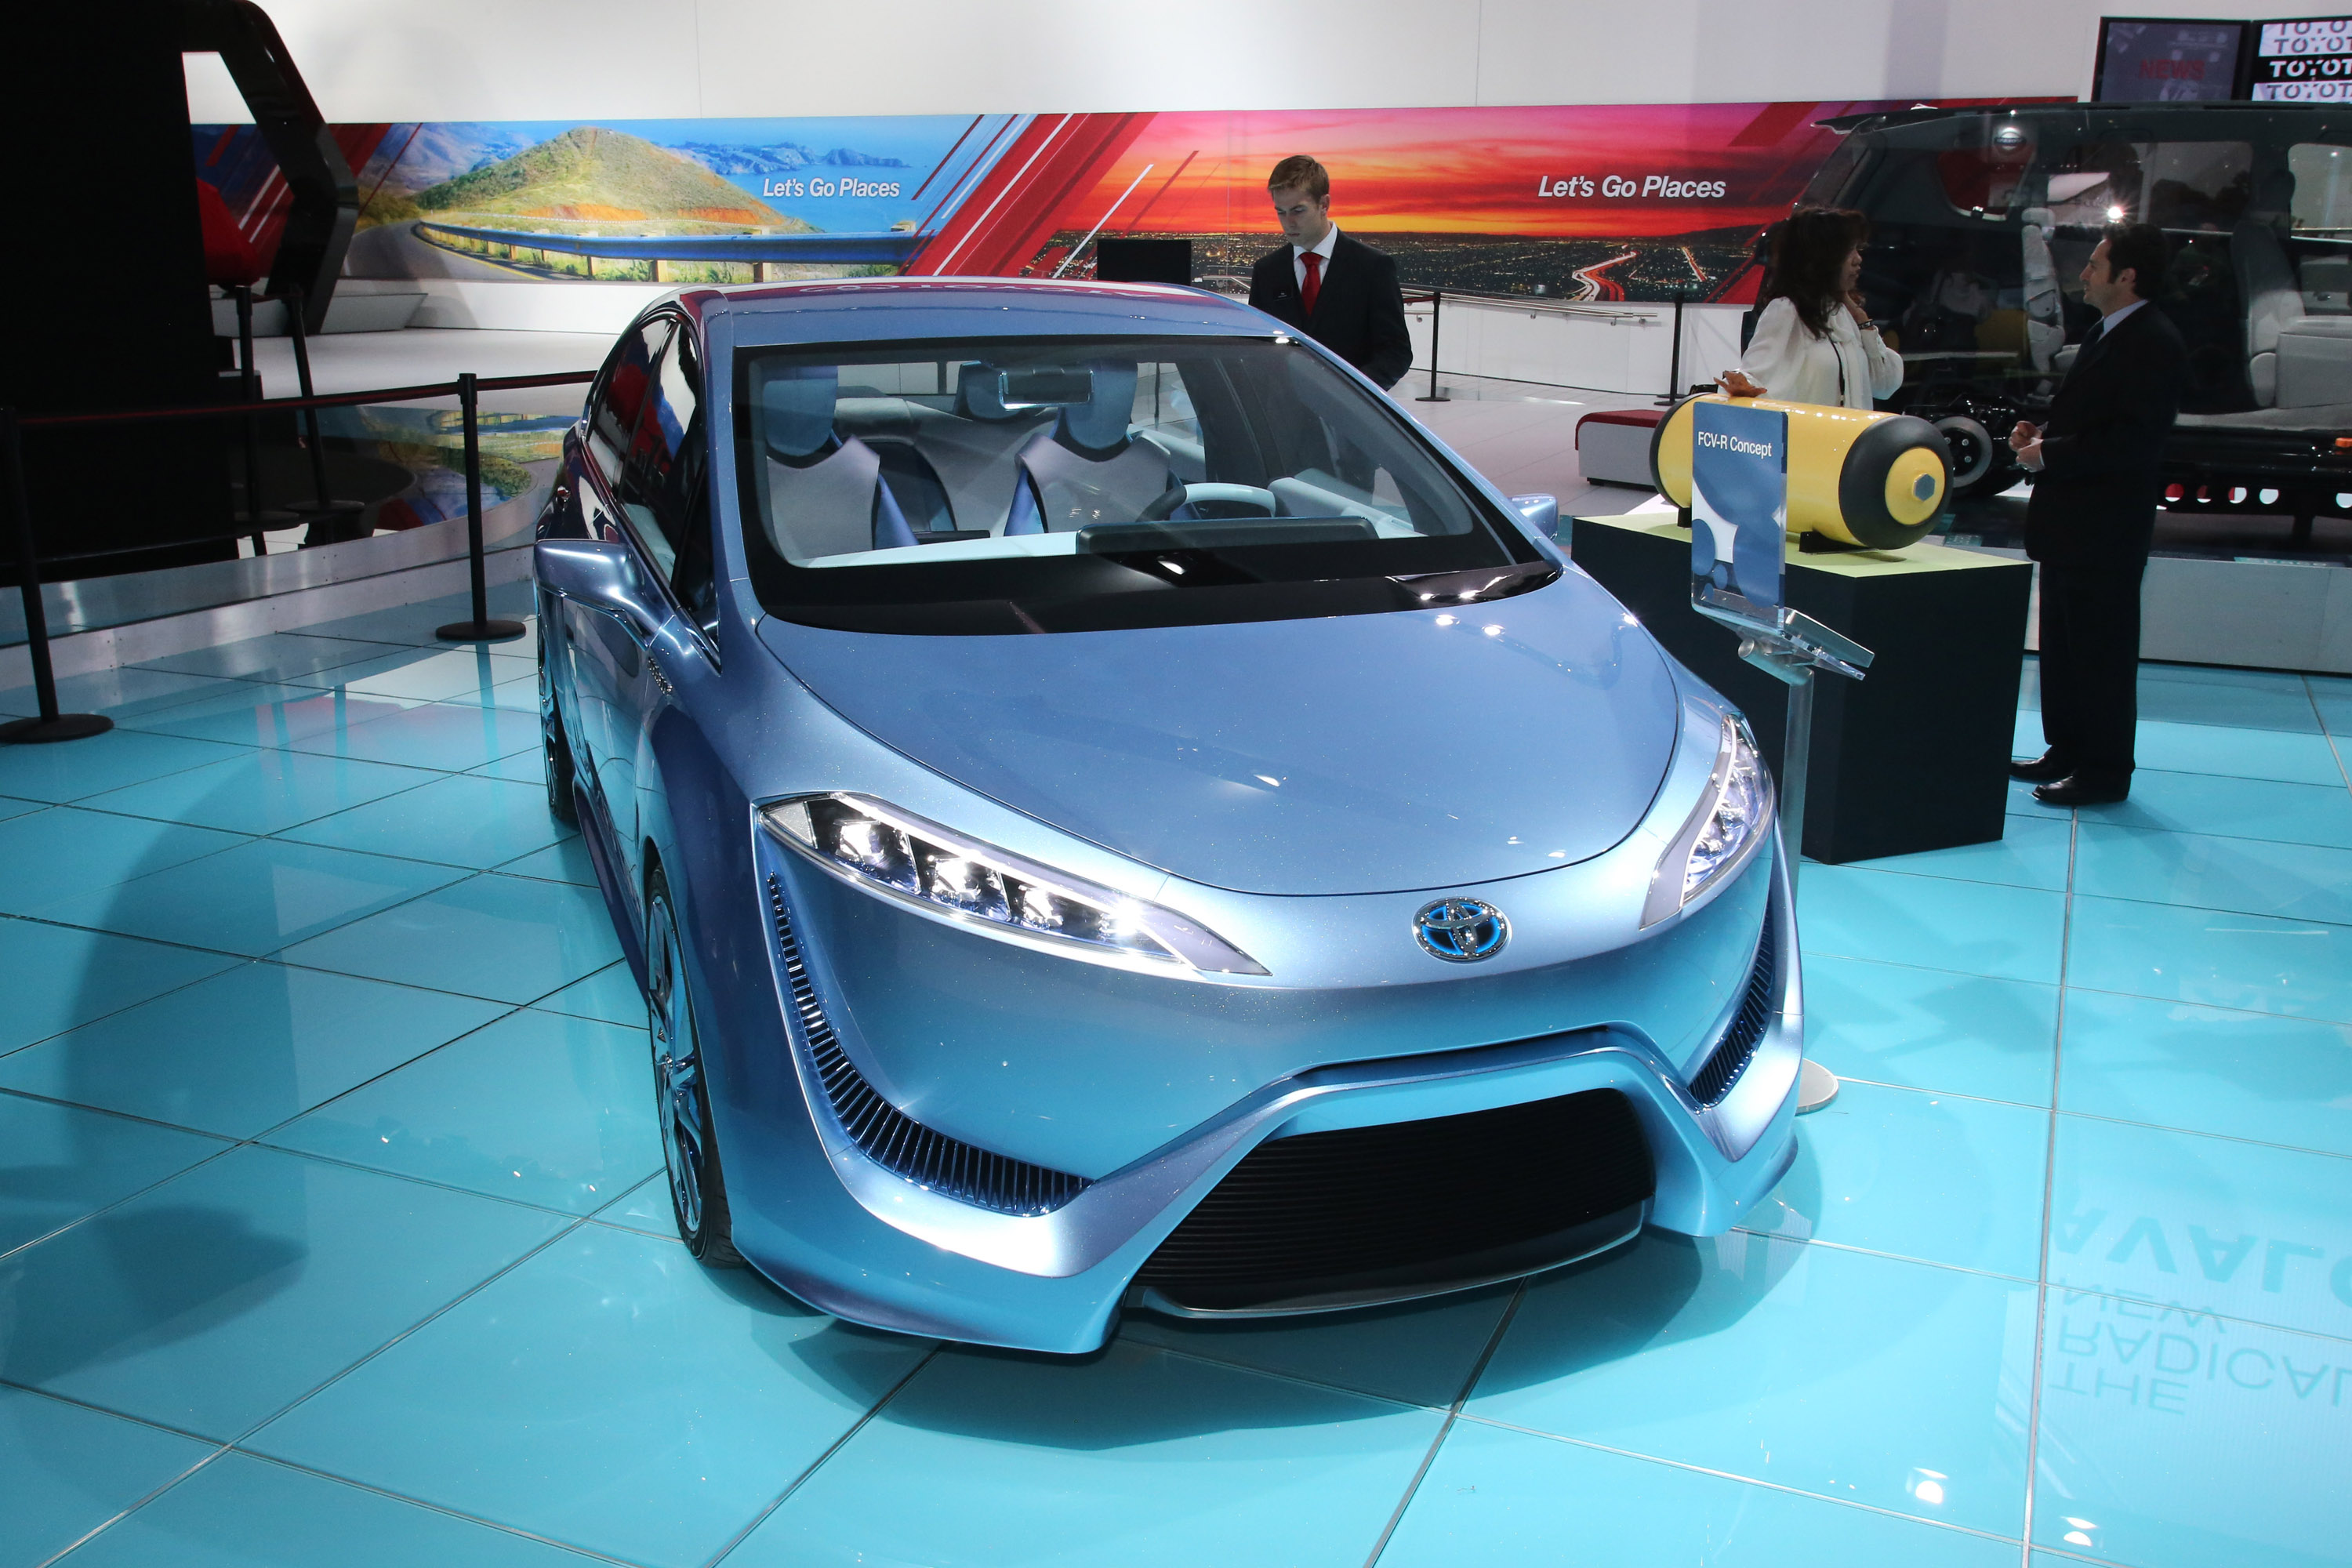 Toyota FCV-R Concept Detroit